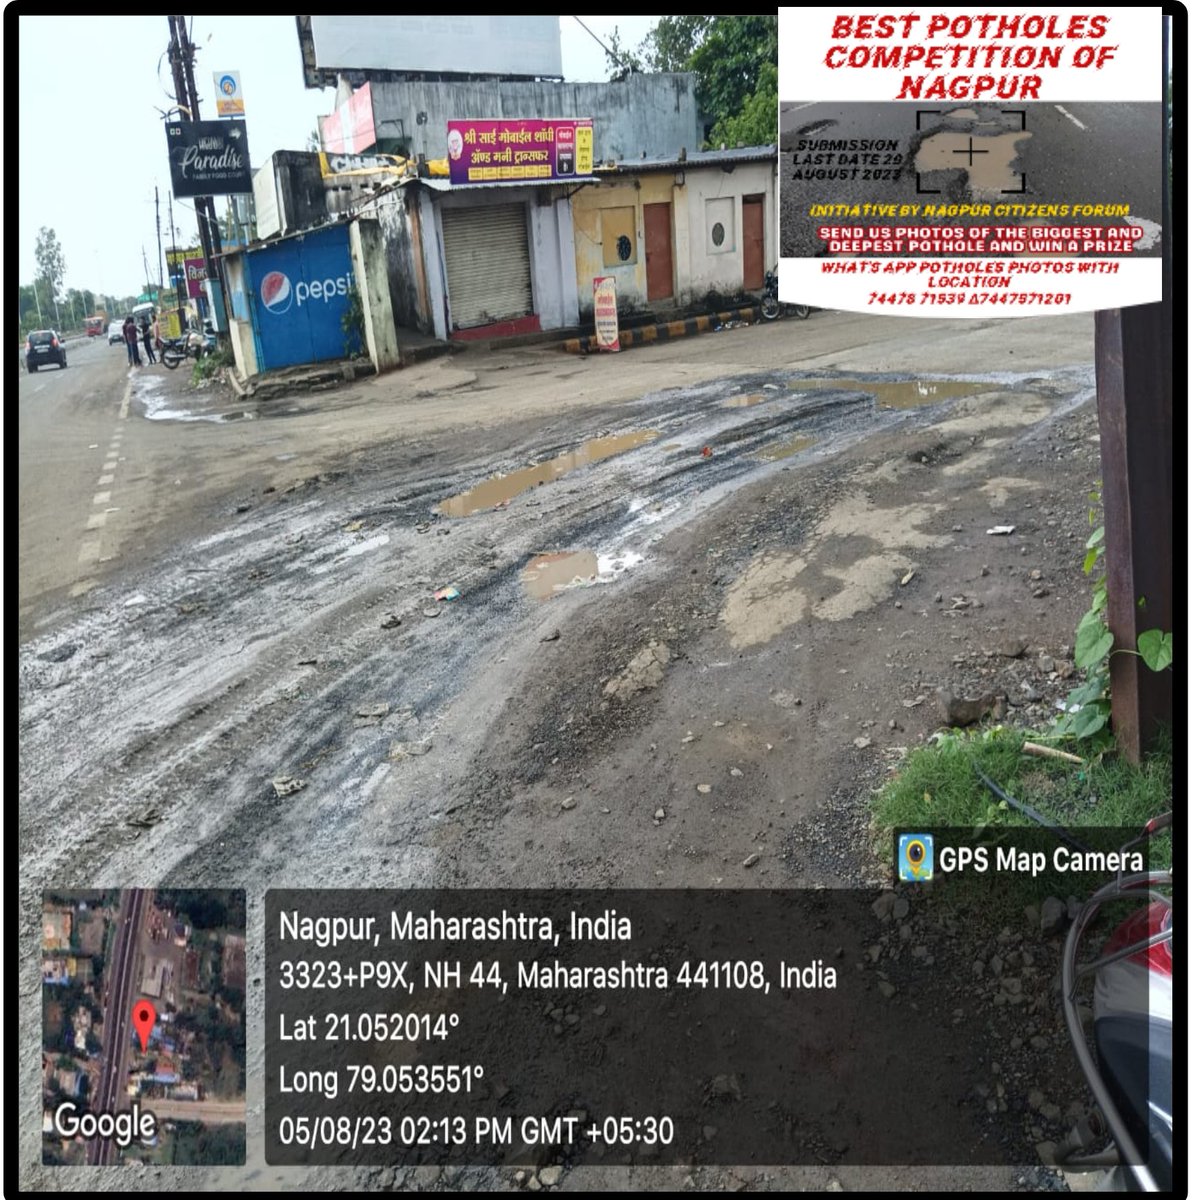 Citizens responding. #Potholes Competition of #Nagpur Send us photos of d biggest and deepest potholes & win prize @anjayaaTOI @Abhijitsing4U @AmitBandurkar @Rohit_0309 @ProshuncTOI @vaibhavgTOI @RanjitVDeshmukh @mataonline @LoksattaLive @TOI_Nagpur @SunilWarrier1 @bolsarfaraz